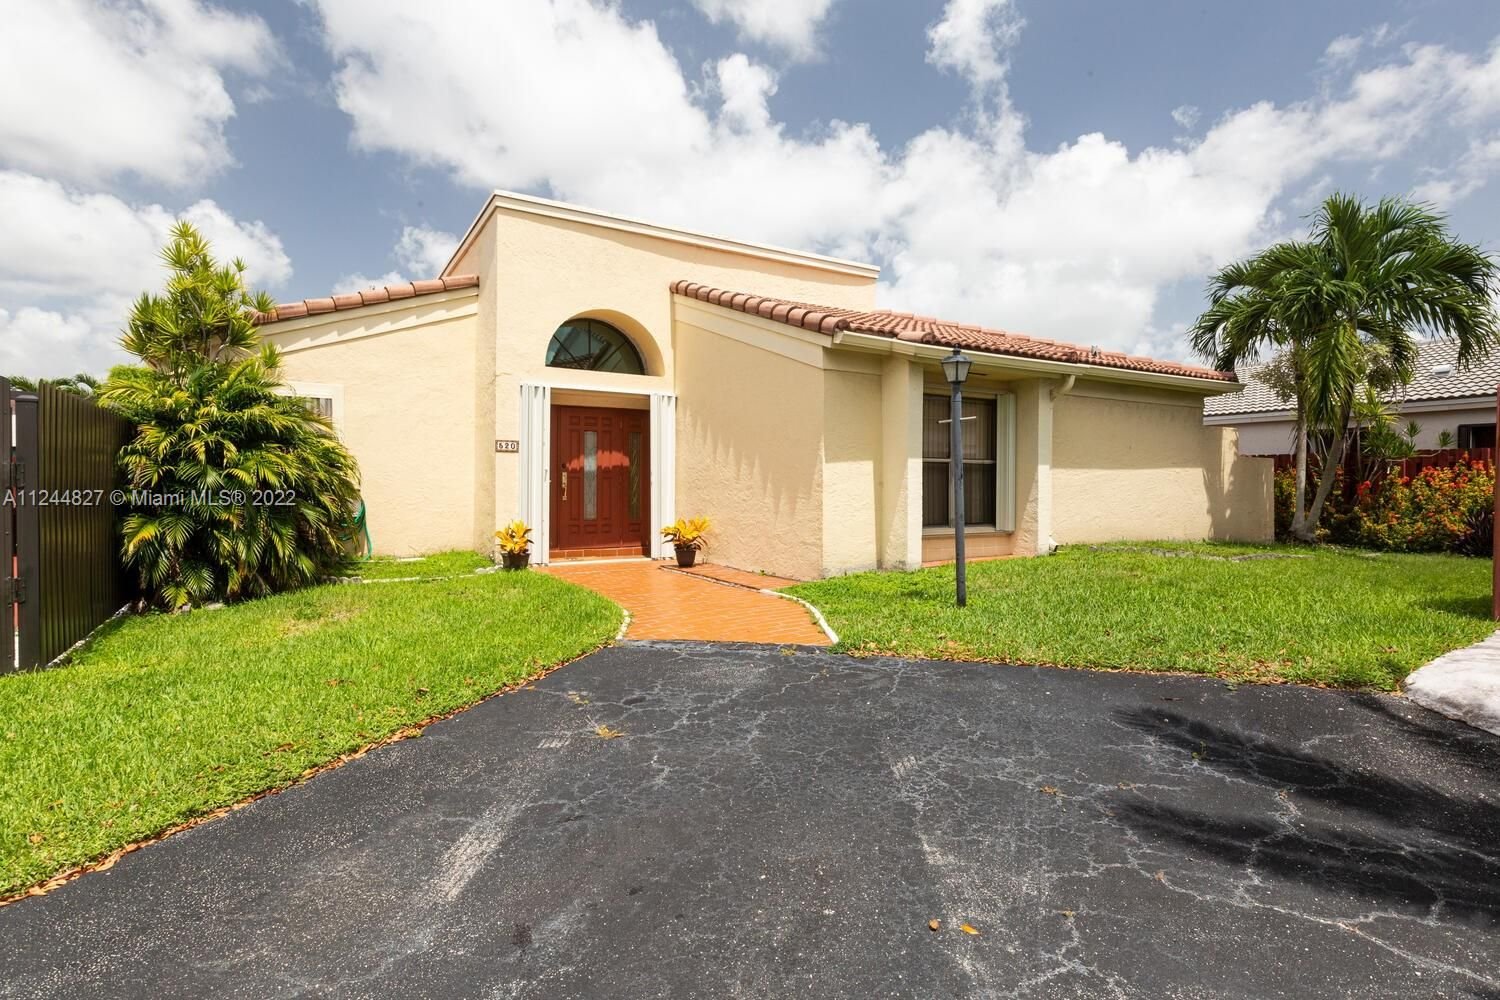 Real estate property located at 520 88th Pl W, Miami-Dade County, Miami, FL